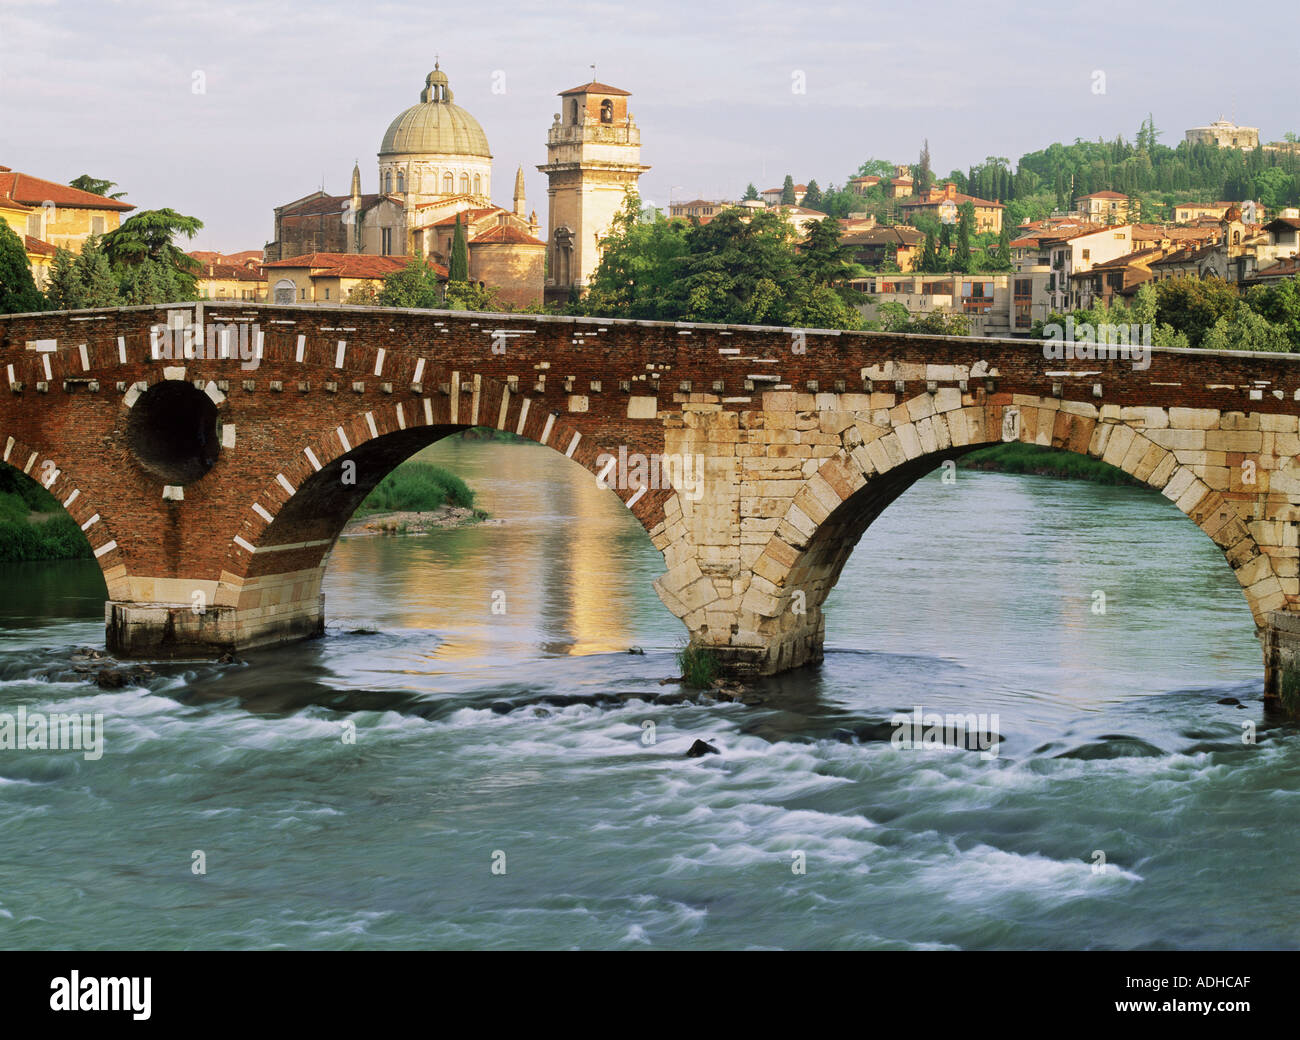 Pietra Bridge over Adige River with San Giorgio Cathedral beyond in Verona, Italy Stock Photo